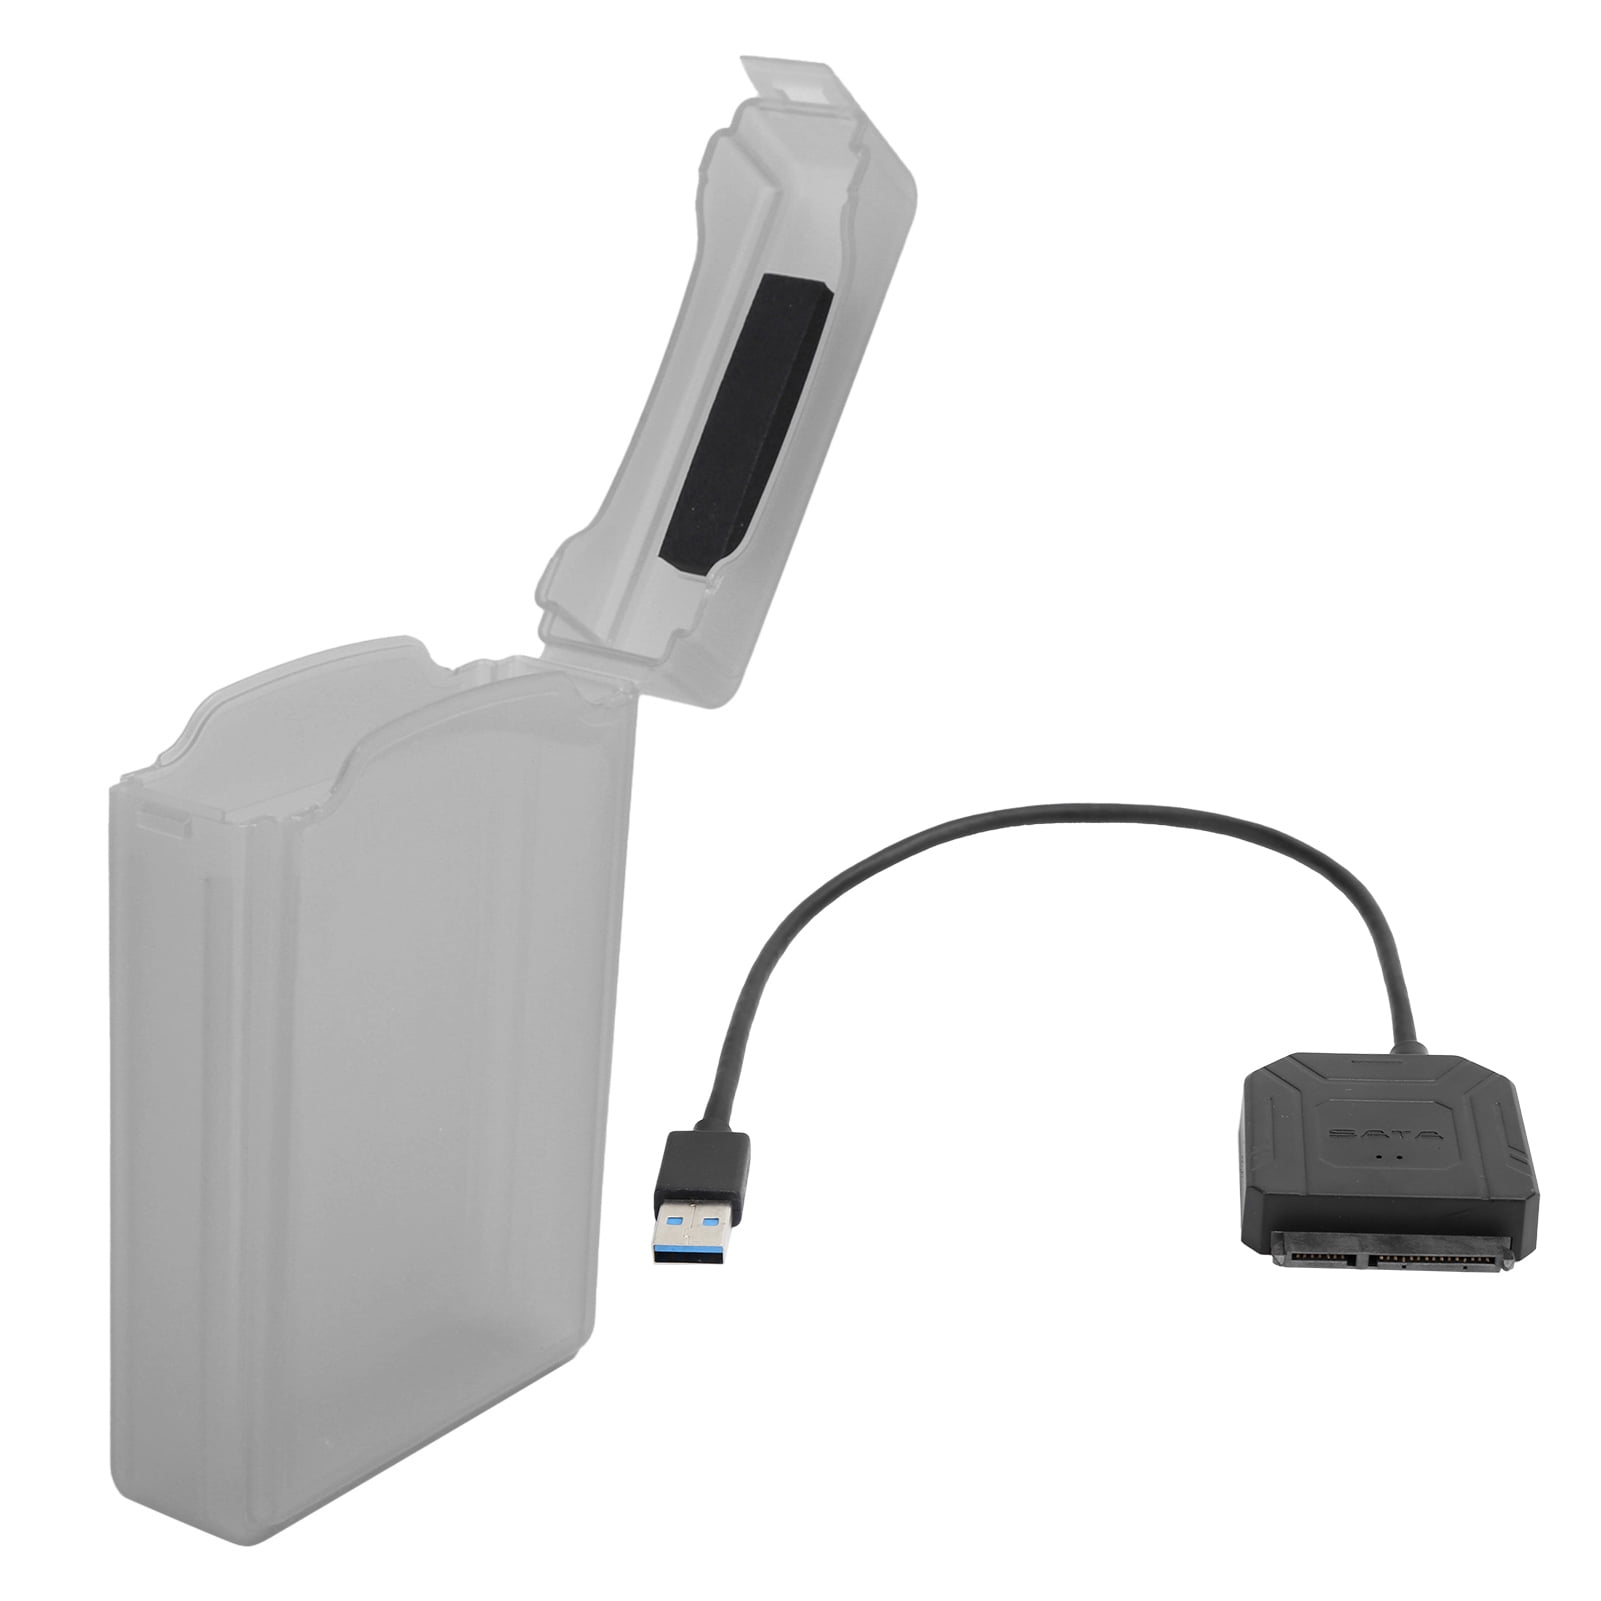 SATA to USB3.0 Converter USB 3.0 to 2.5" SATA III Hard Drive Adapter Cable/UASP 